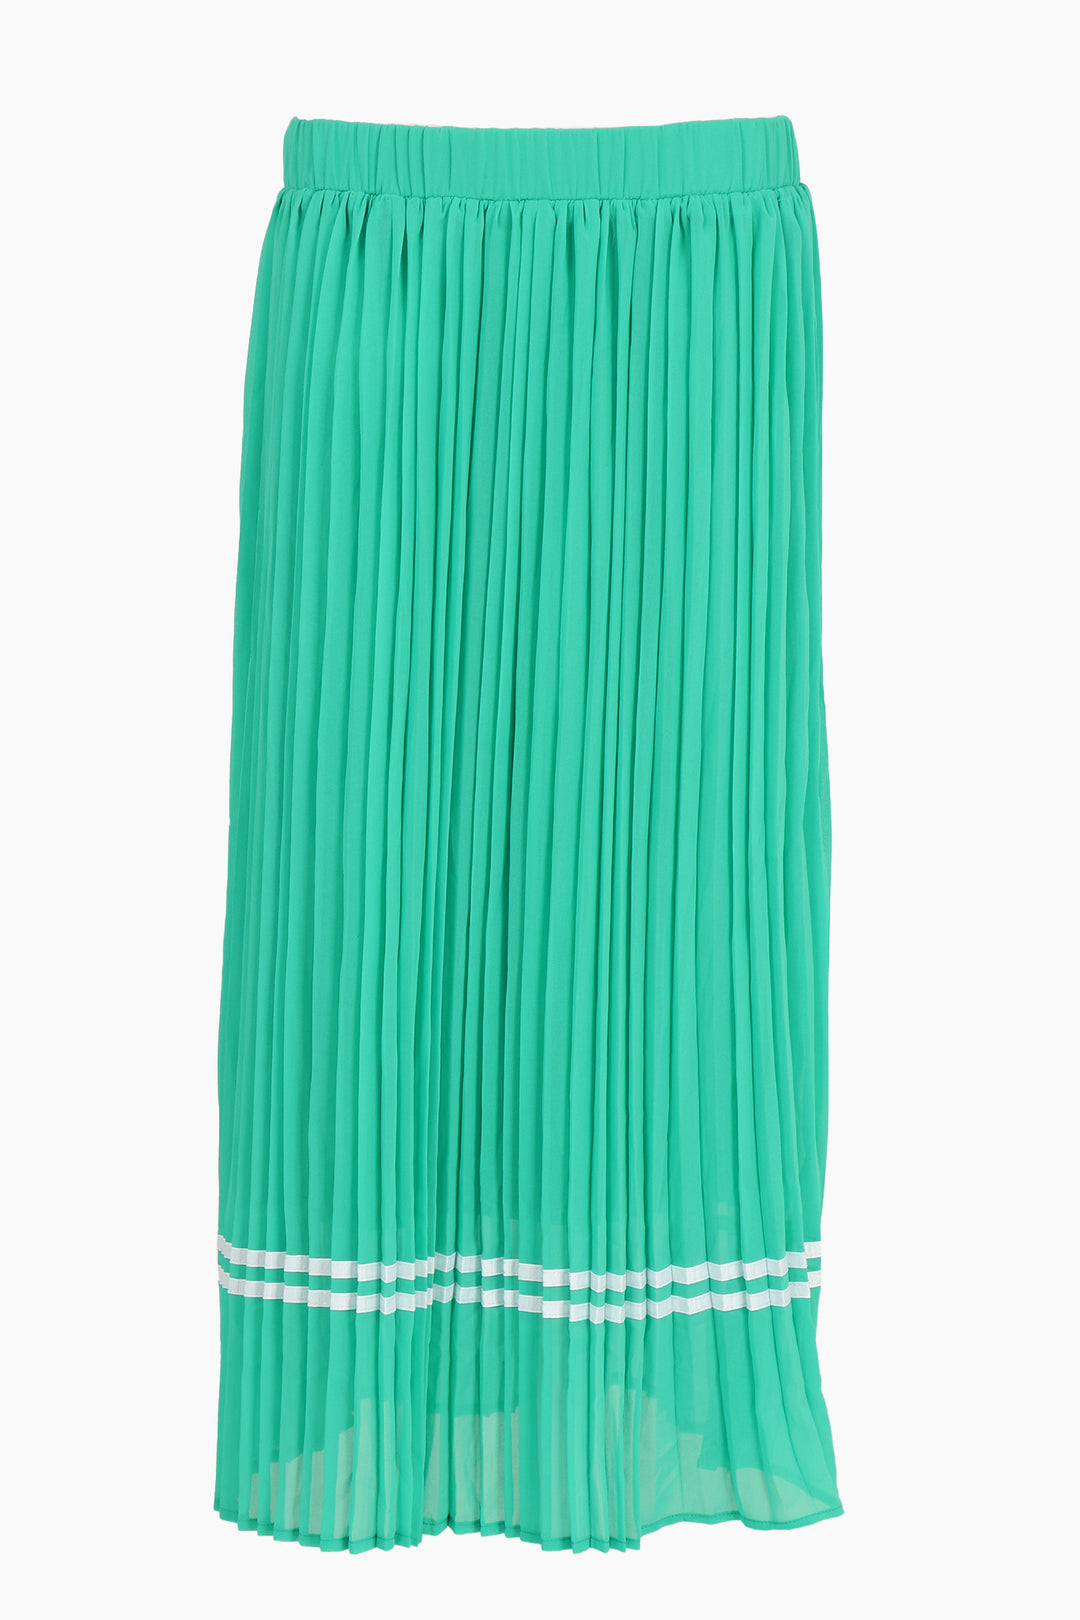 green pleated midi skirt with elastiacted waist